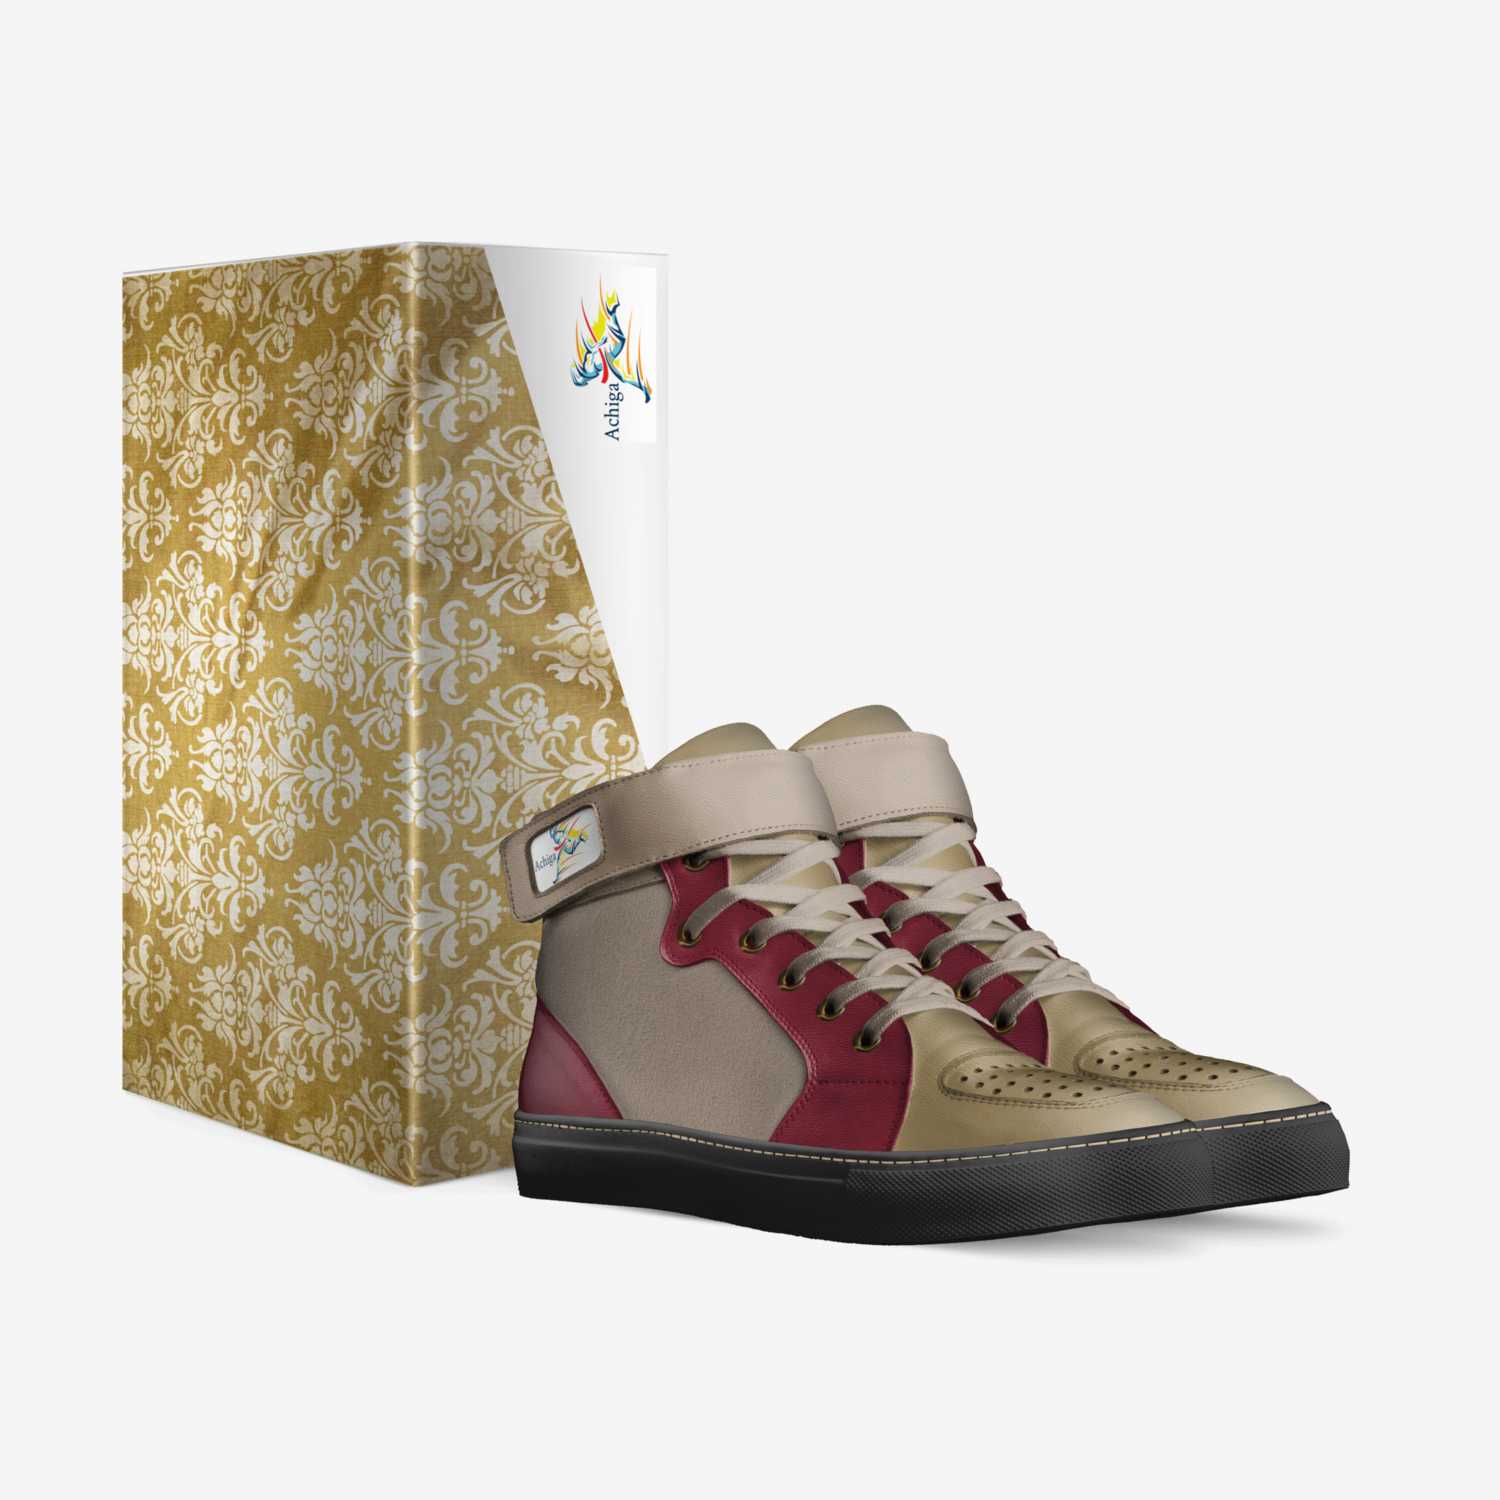 Achiga custom made in Italy shoes by Richard Donato | Box view